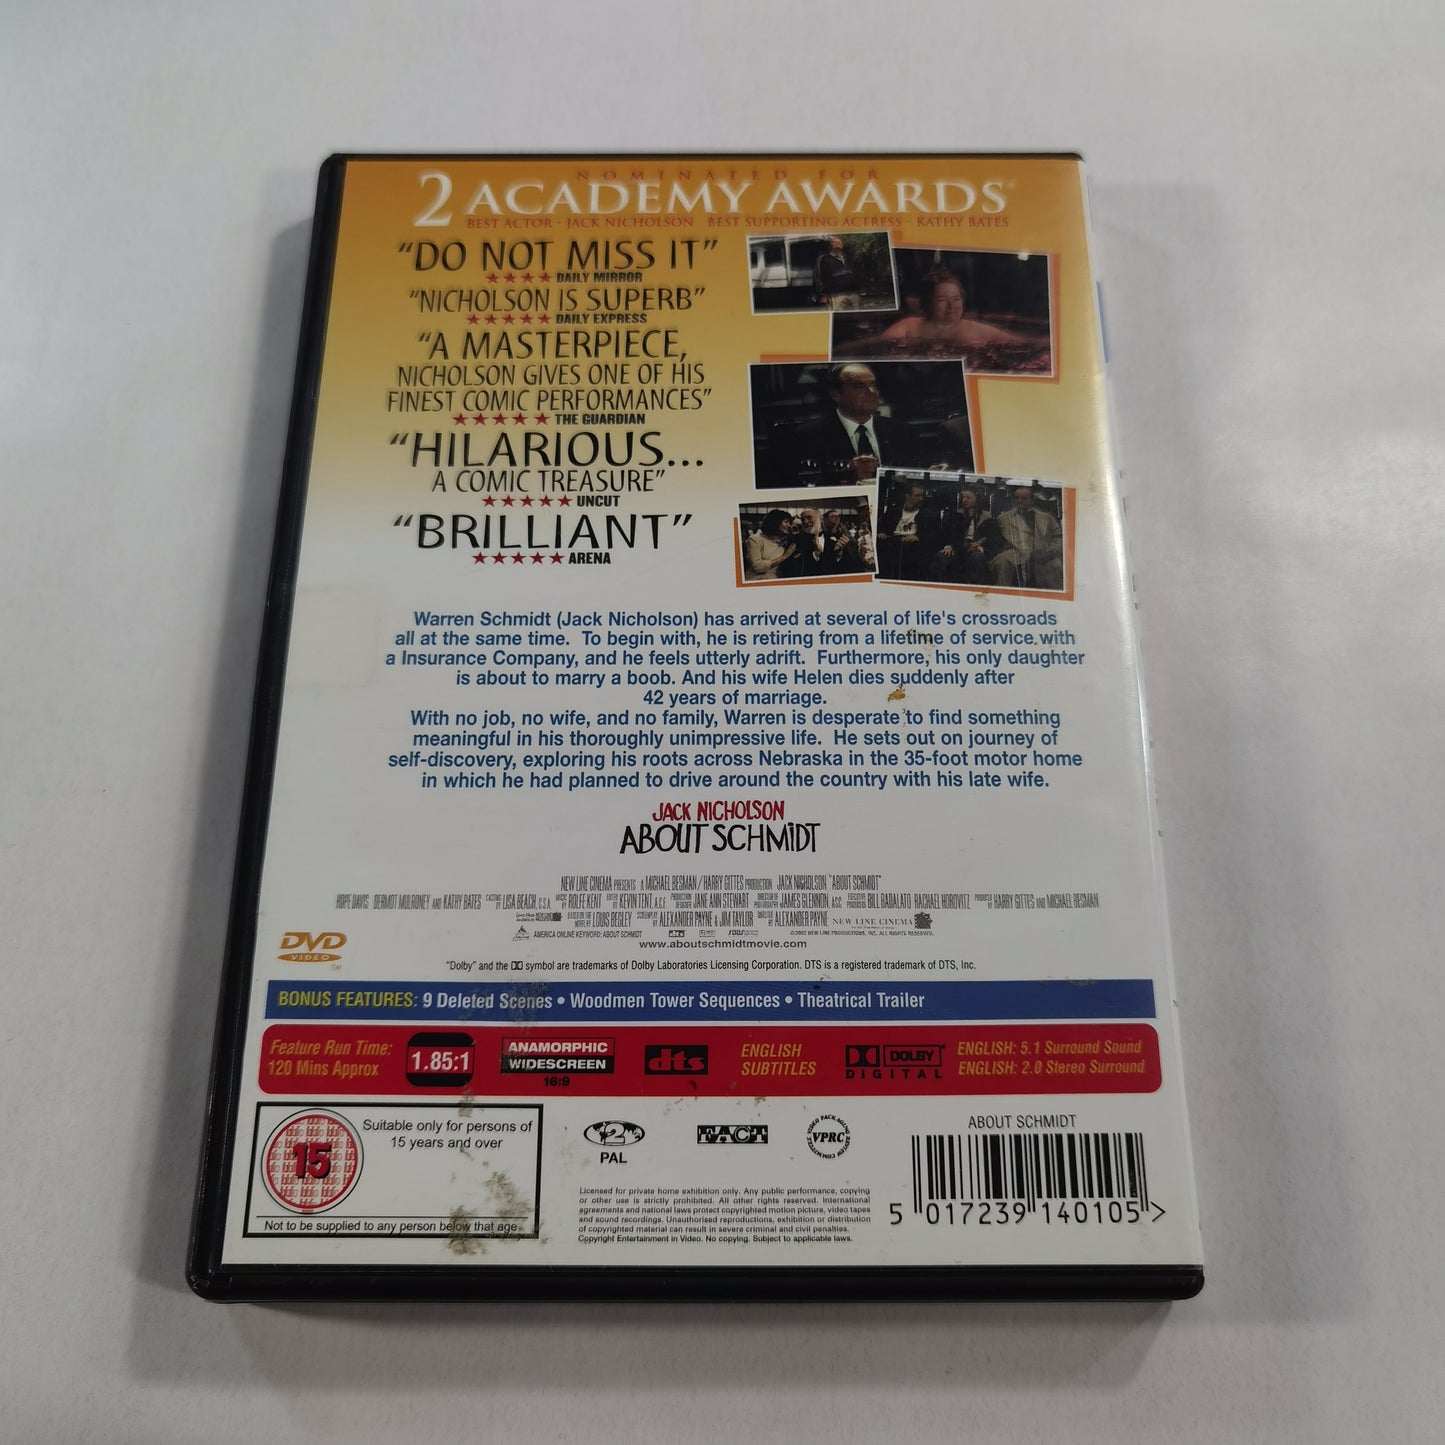 About Schmidt (2002) - DVD UK RC